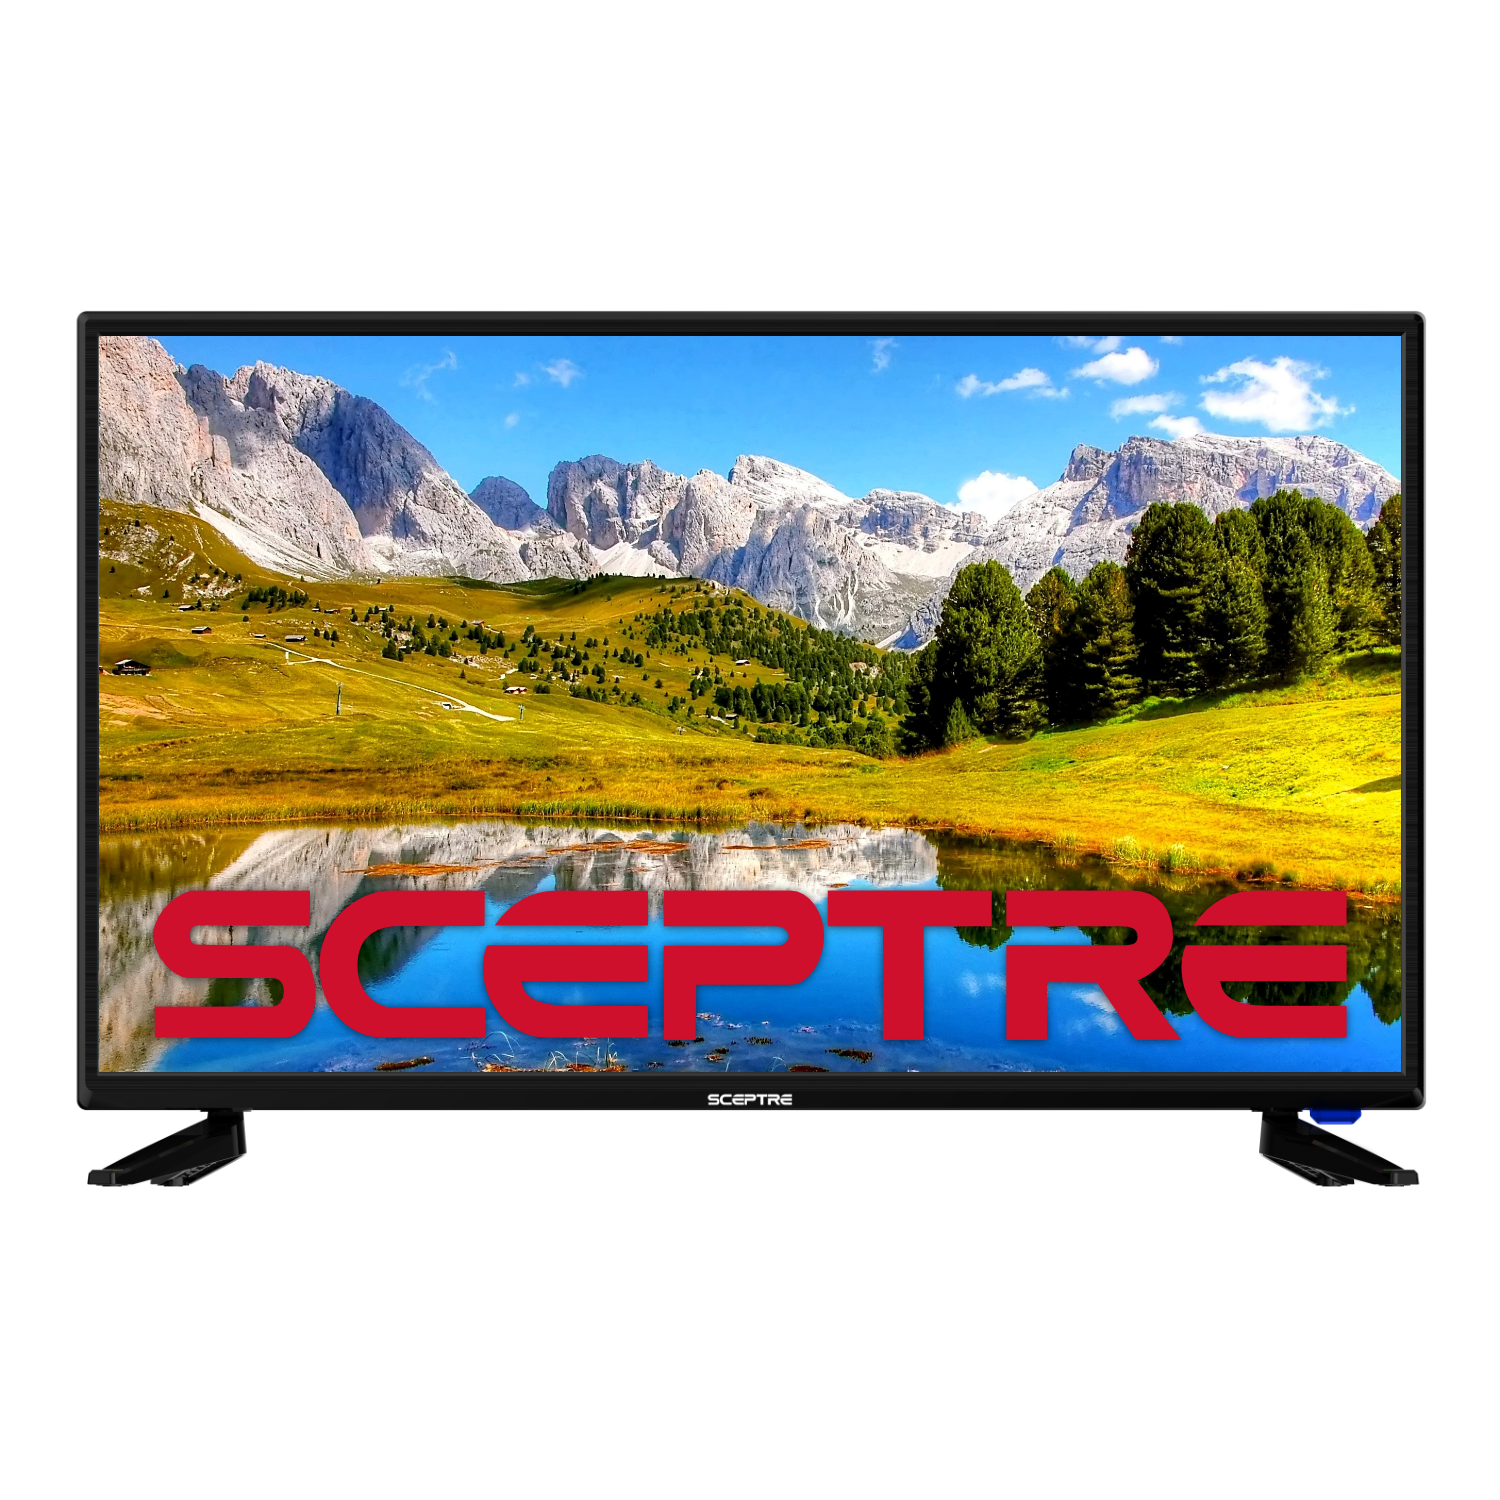 Sceptre 32" Class 720P HD LED TV X322BV-SR - image 1 of 10